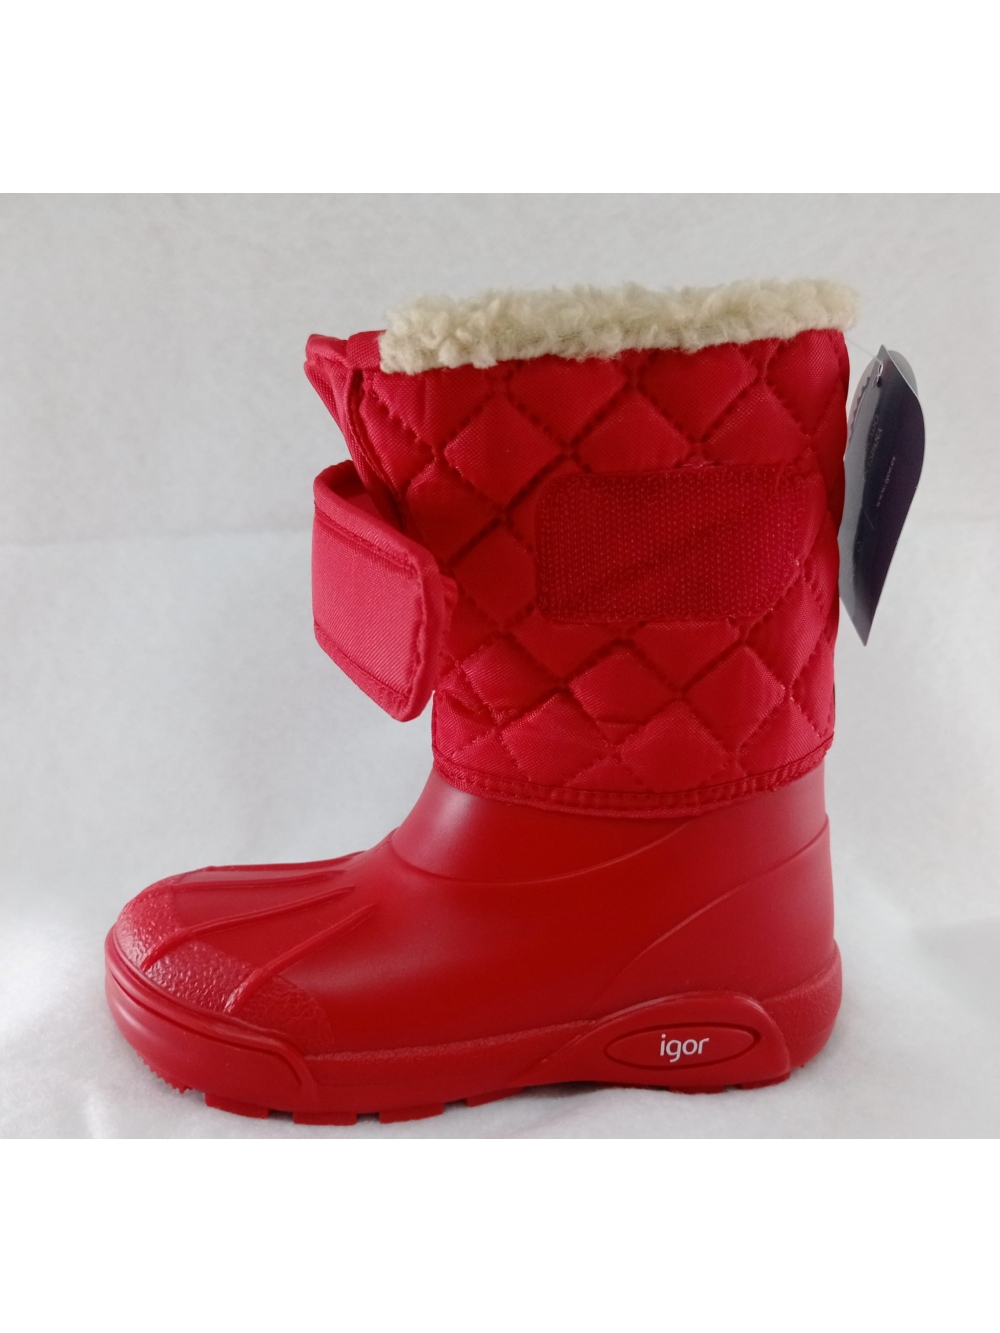 Comprar botas de nieve para niño de Igor